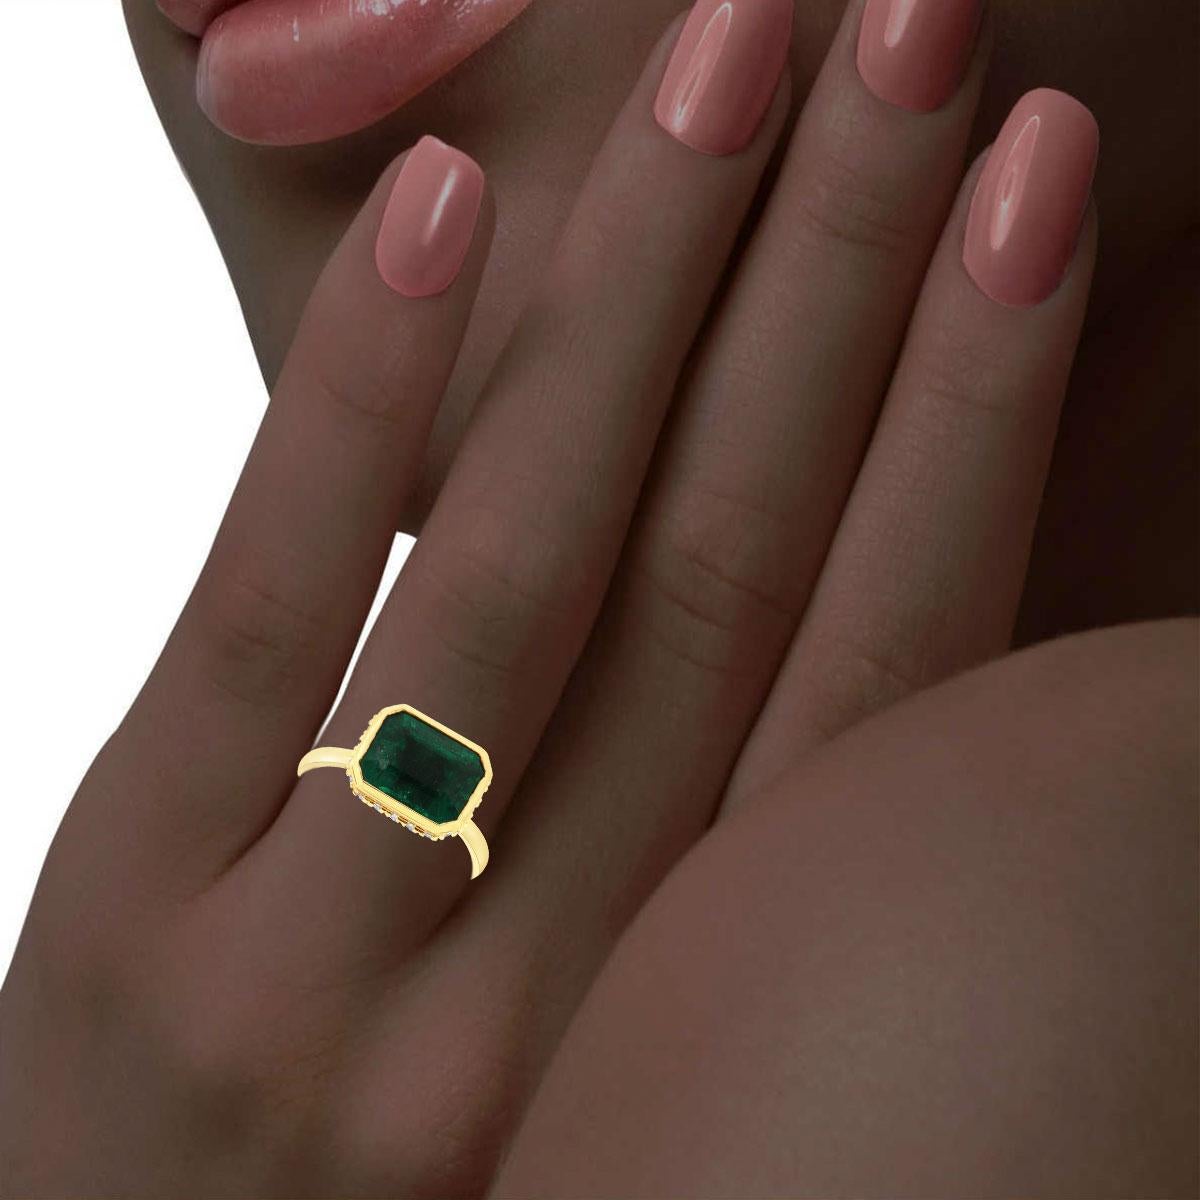 Emerald Cut GIA Certified 3.23 Carat Green Emerald 18k Yellow Gold Diamond Ring For Sale